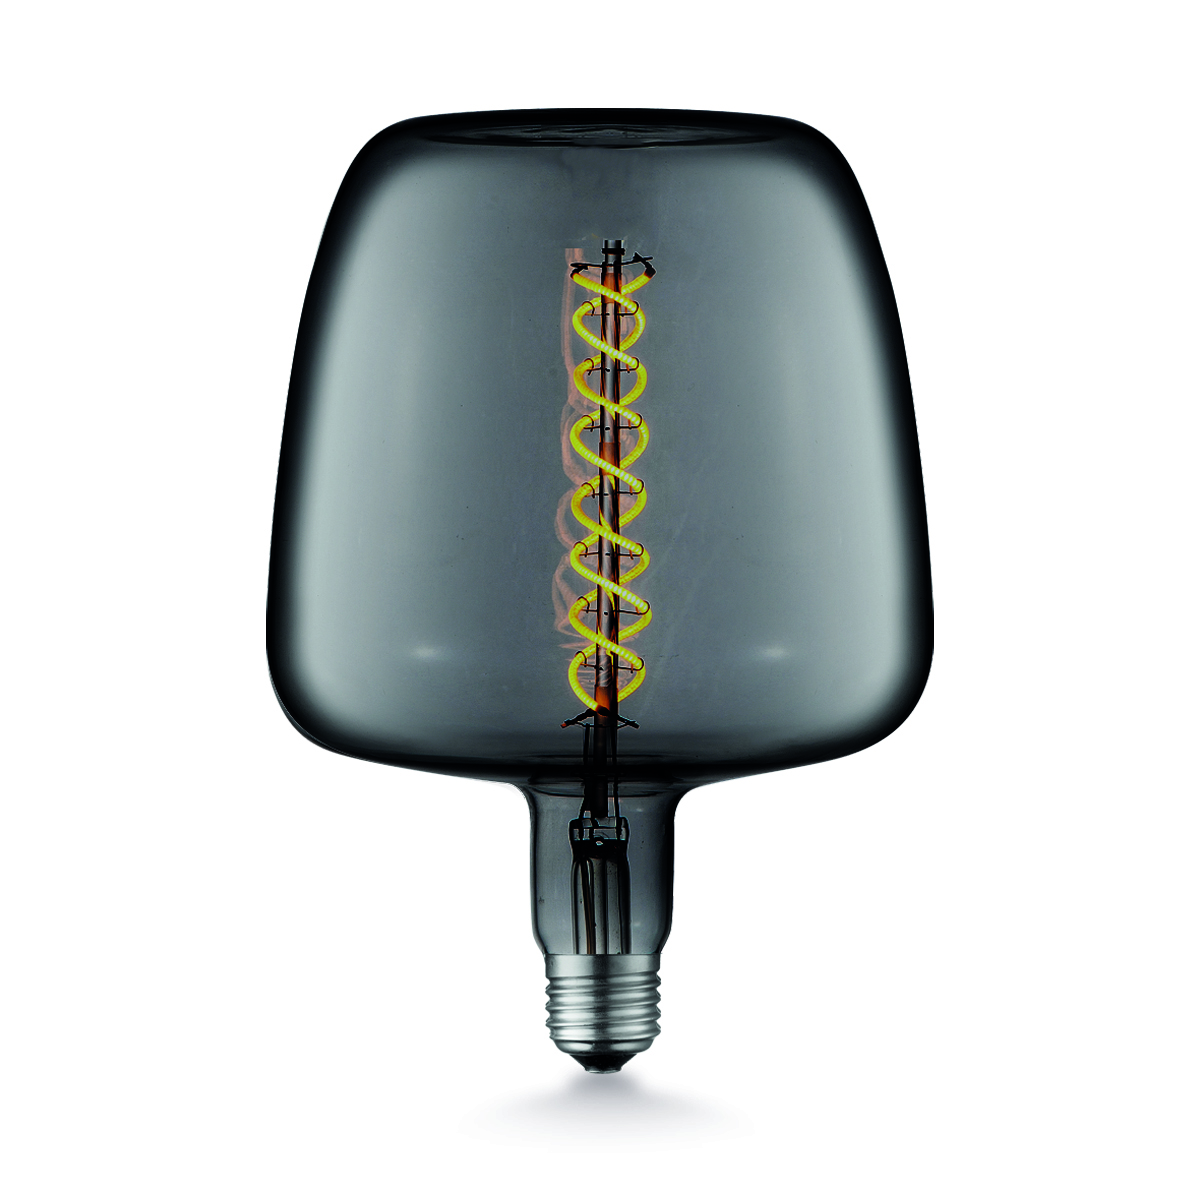 Tangla lighting - TLB-8059-04TM - LED Light Bulb Single Spiral filament - special 4W titanium - jar - dimmable - E27